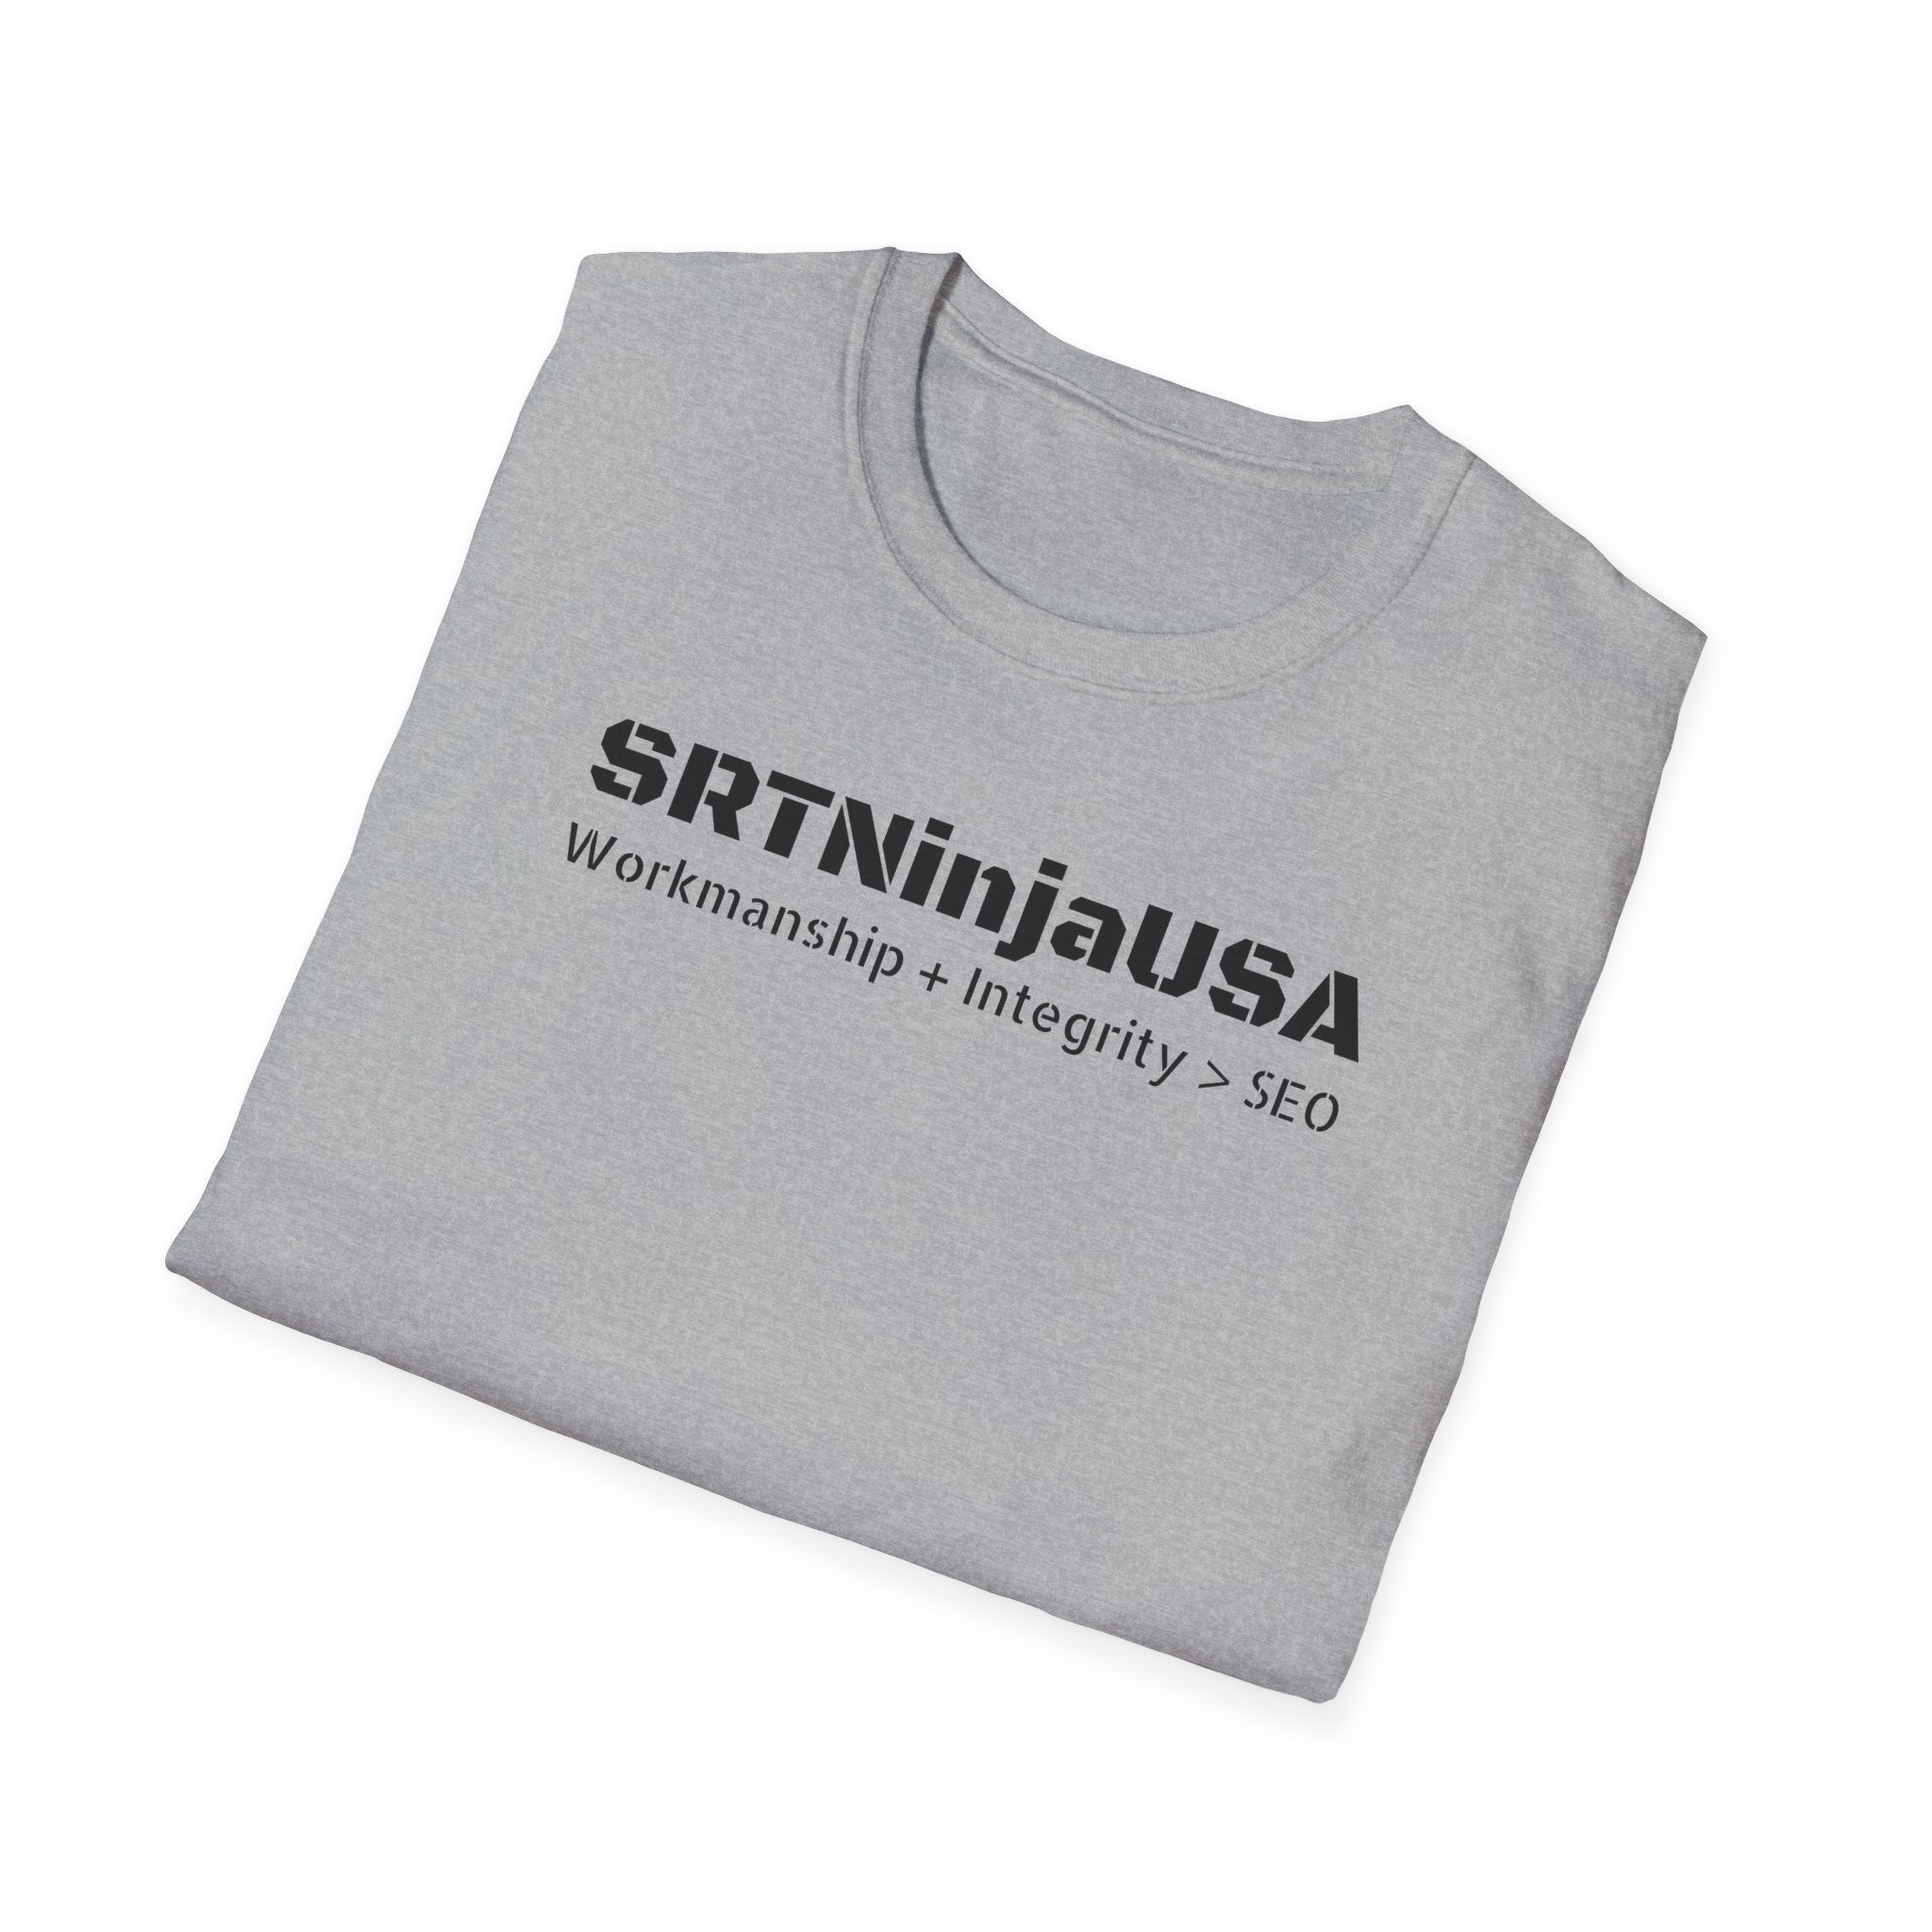 SRTNinjaUSA Anti-SEO Gildan Unisex Softstyle T-Shirt for the Shop